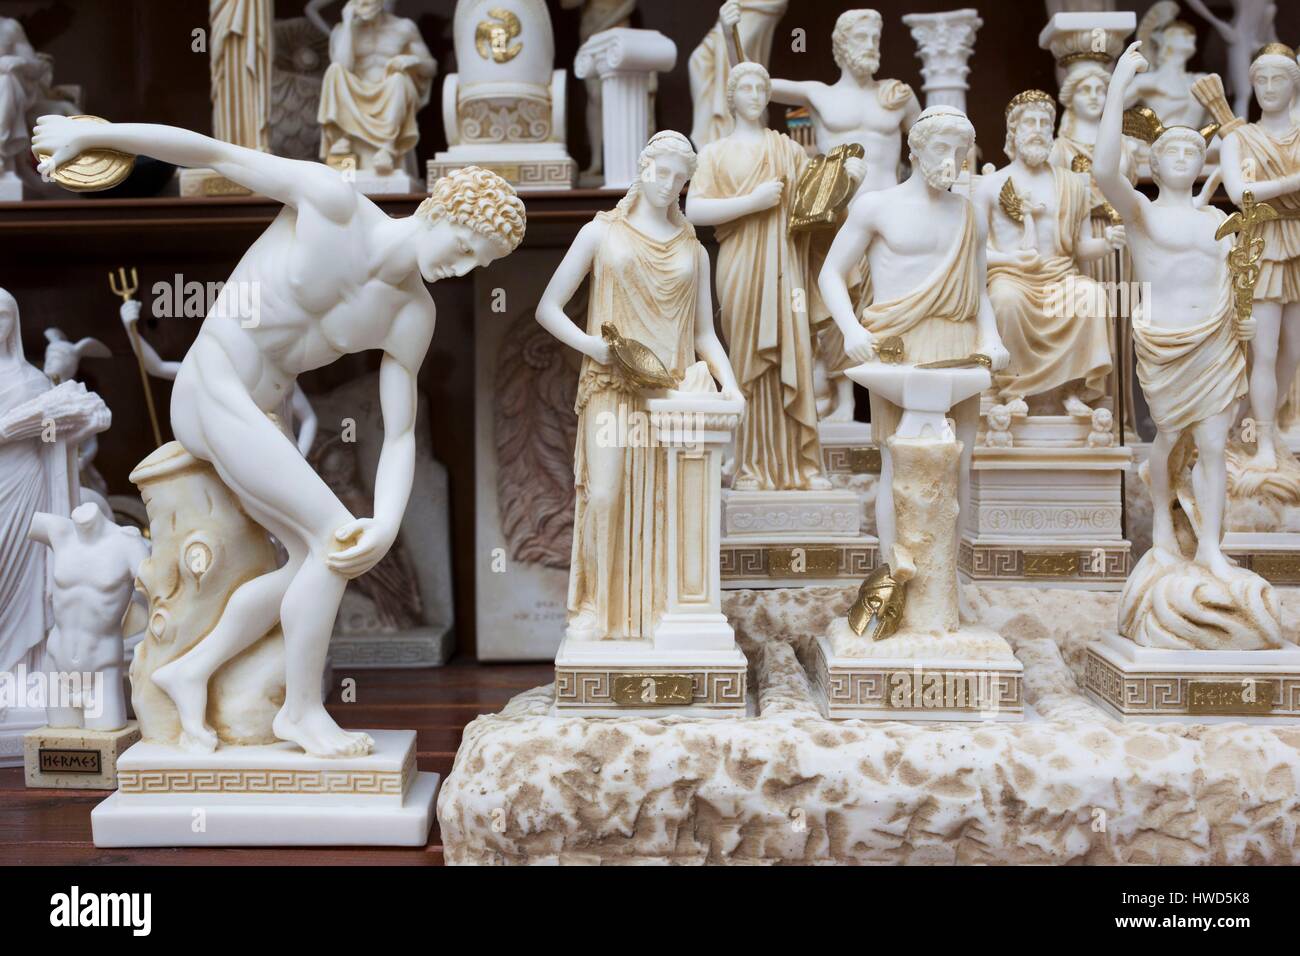 Greece, Epirus Region, Parga, souvenir figures of figures from Greek mythology Stock Photo